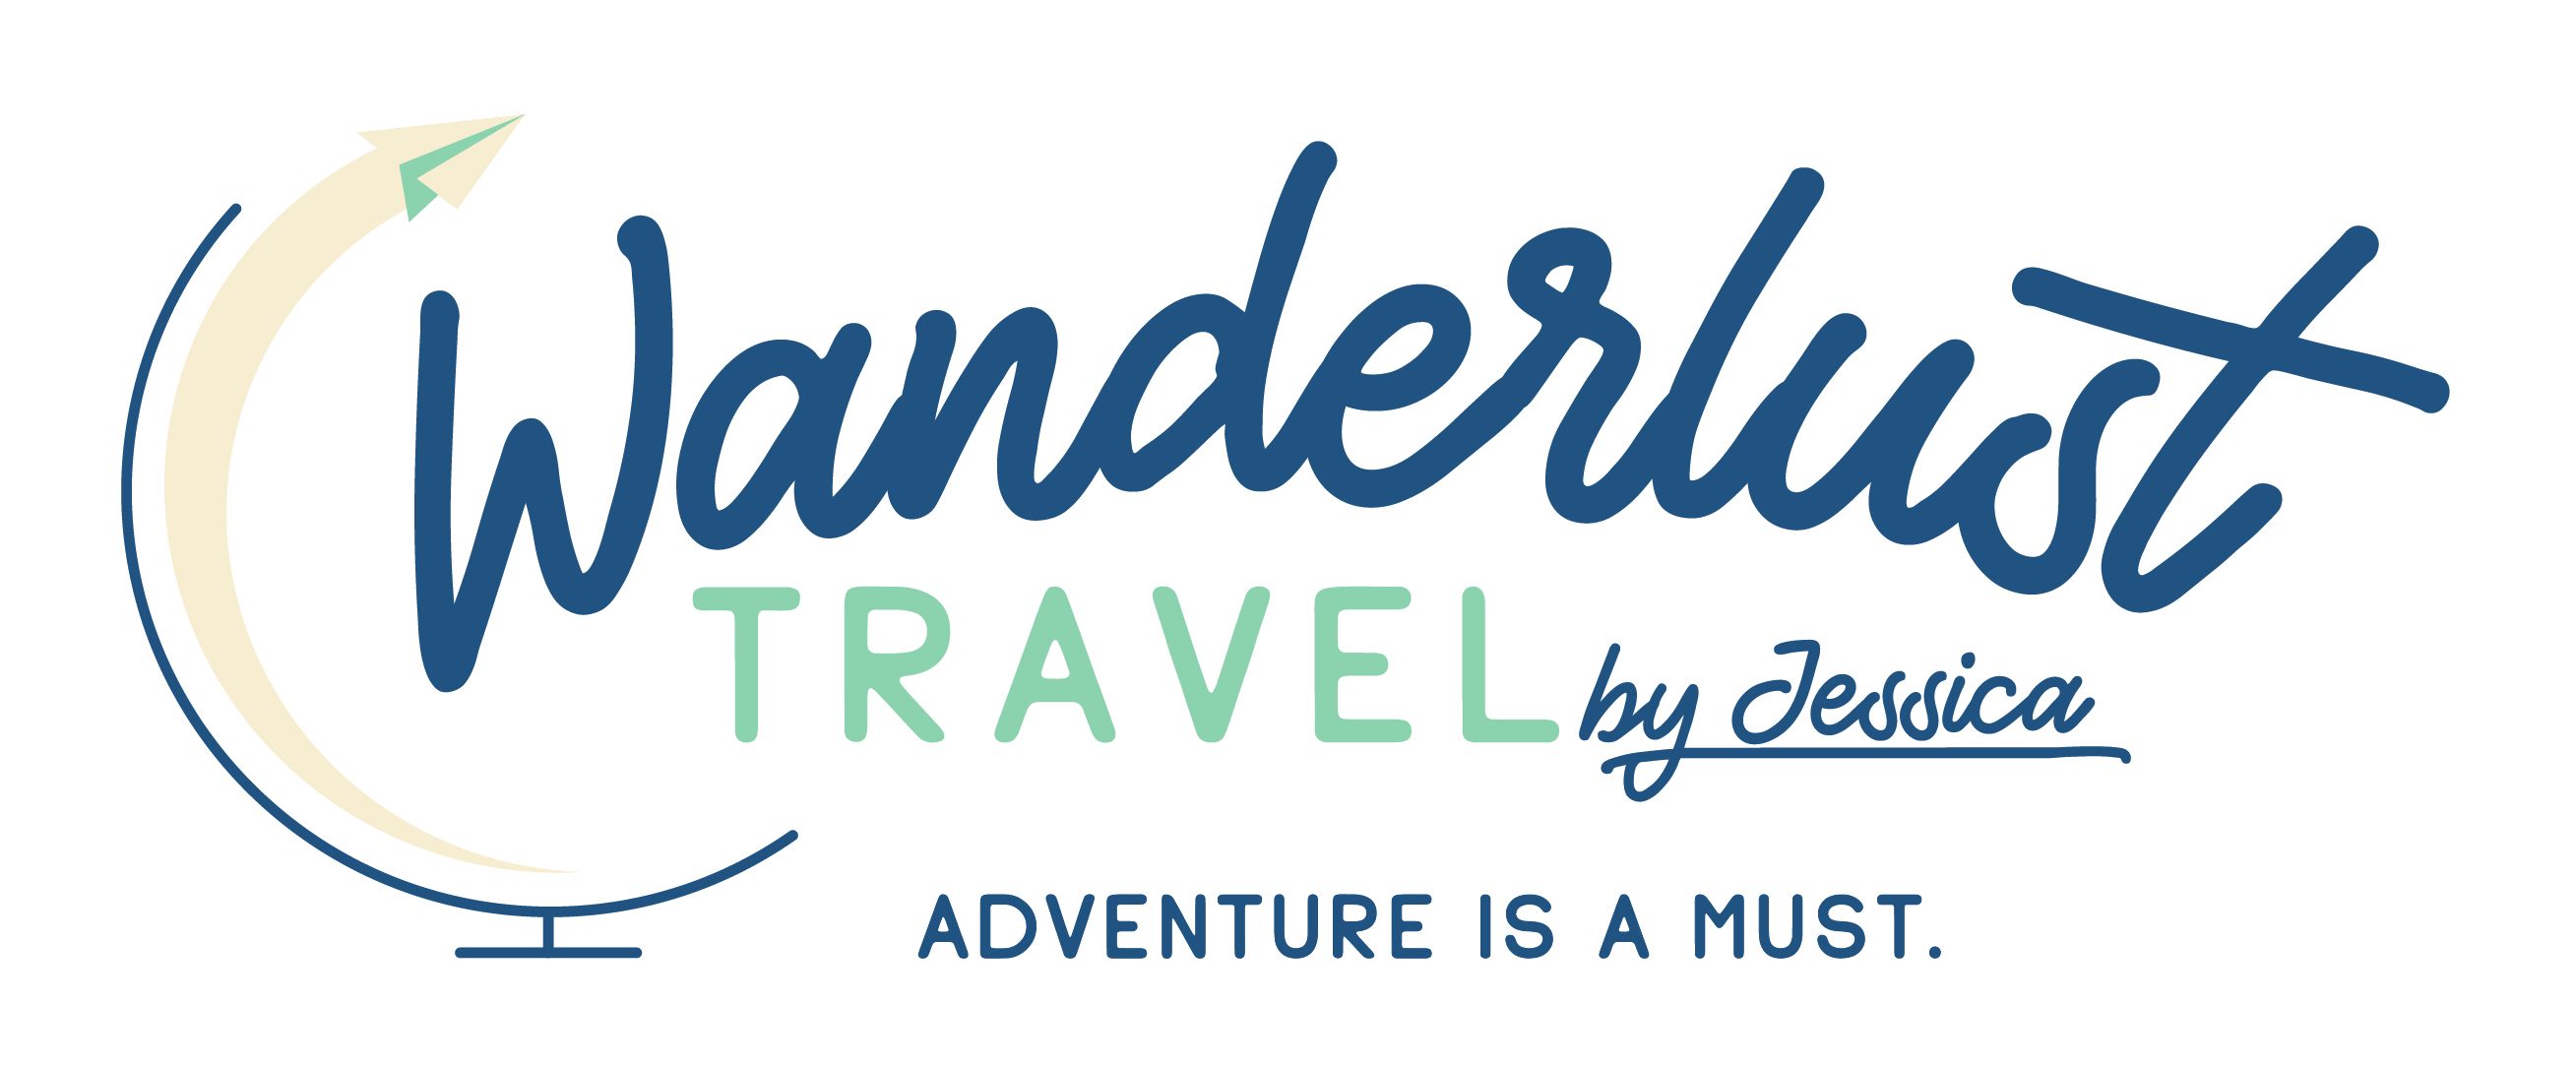 Wanderlust Travel by Jessica, L.L.C.